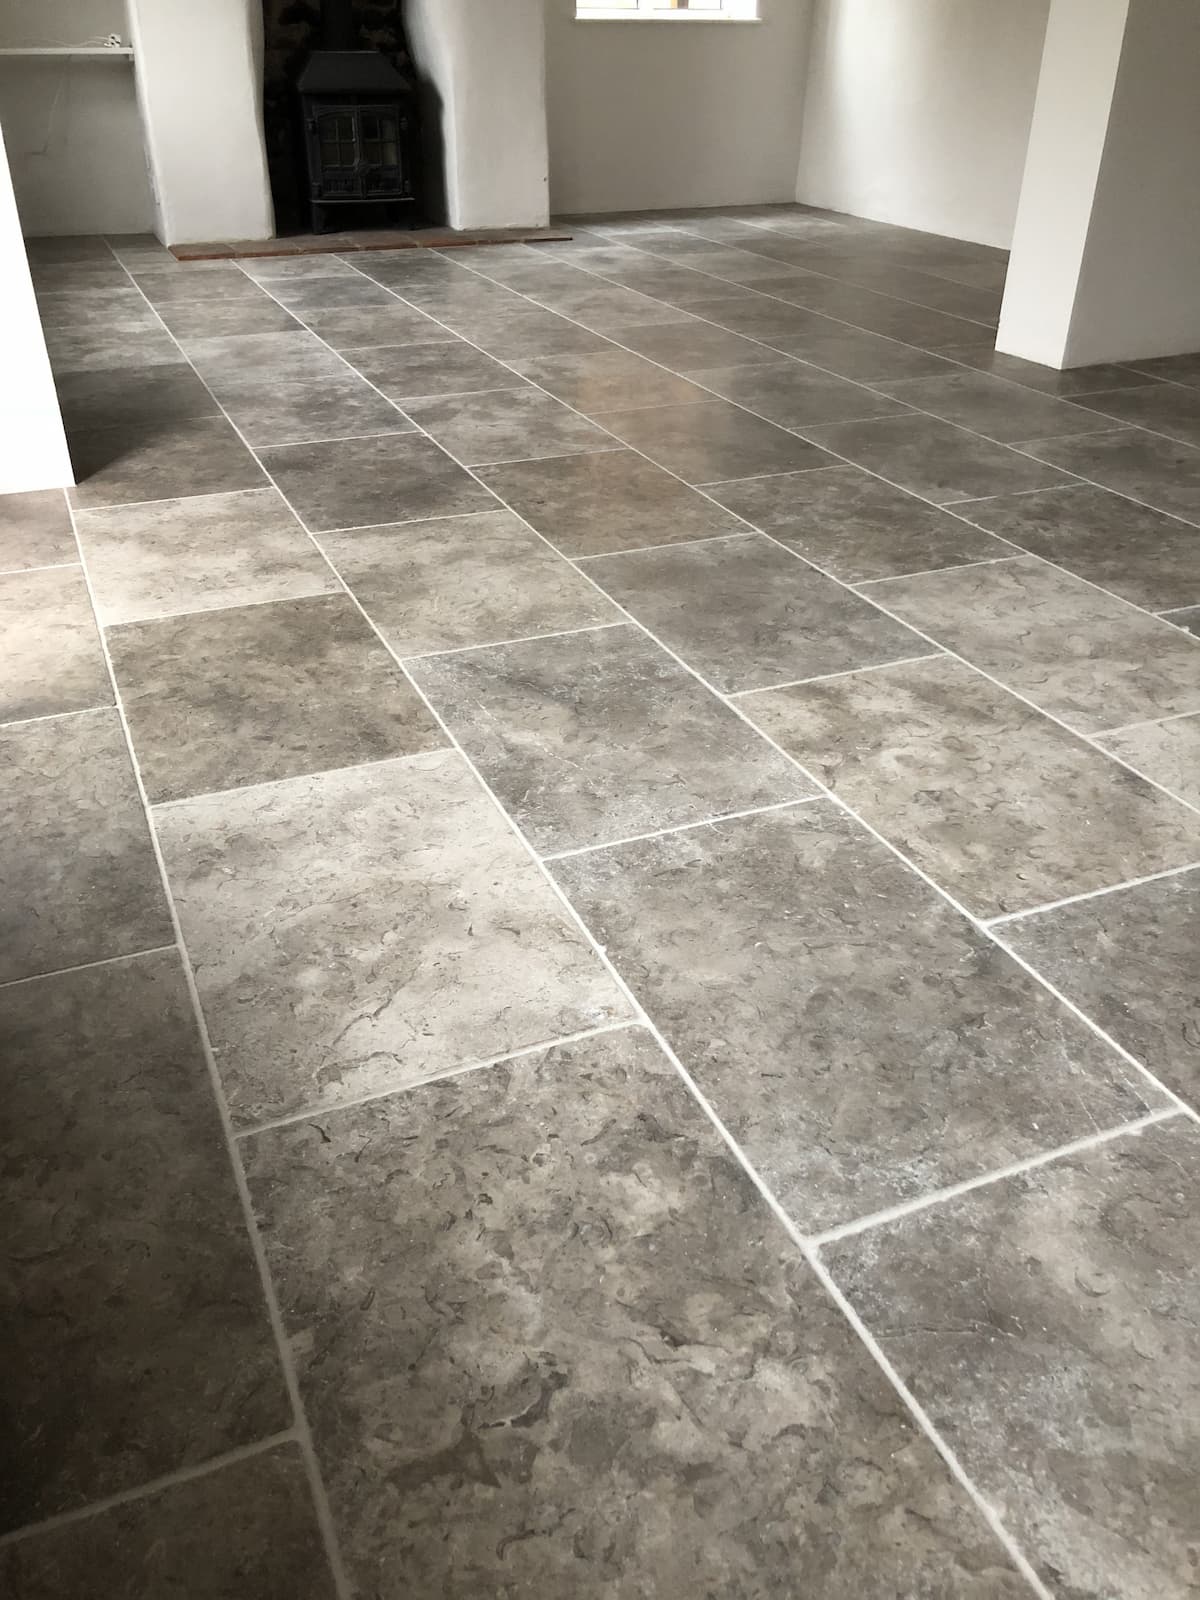 limestone floor tiling laid by david mutten tiling